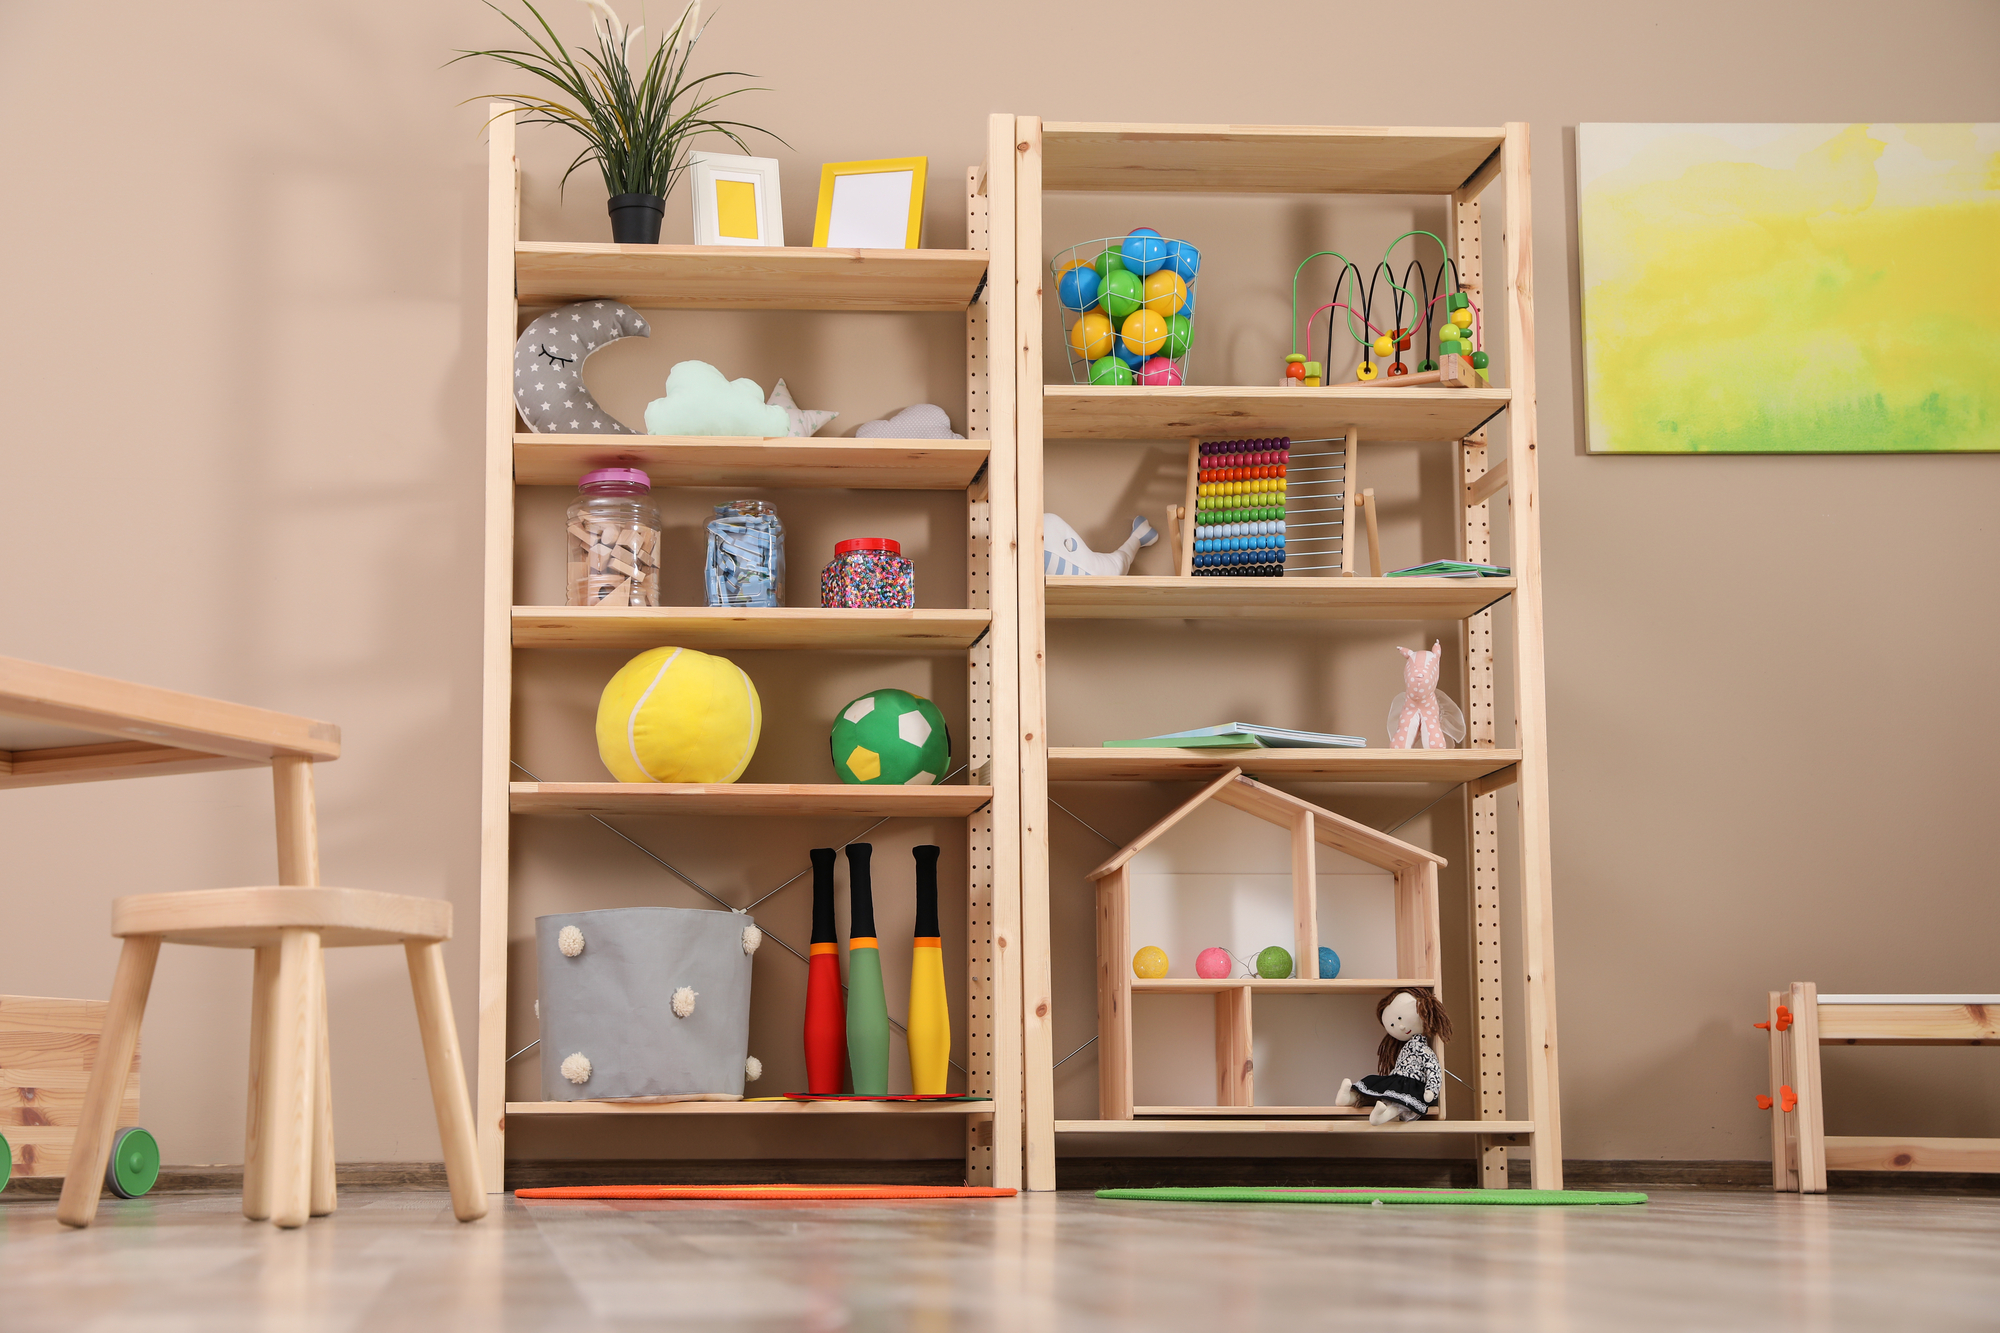 storage for toys in colorful child's room. idea for interior design